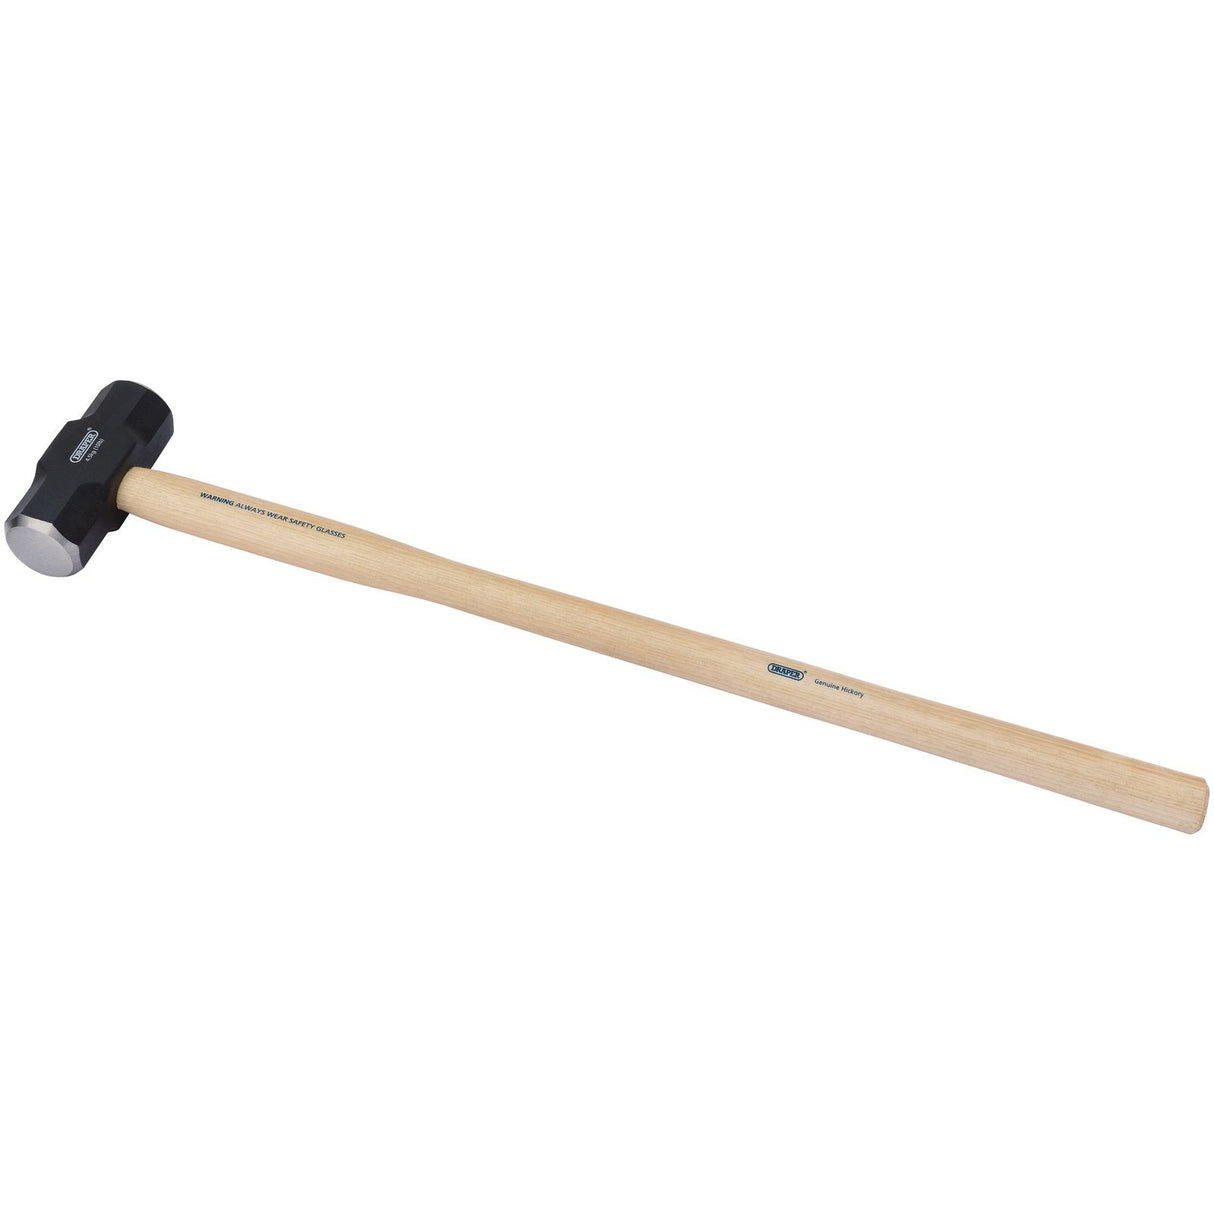 Draper Hickory Shaft Sledge Hammer, 4.5Kg/10Lb - 6220/B - Farming Parts